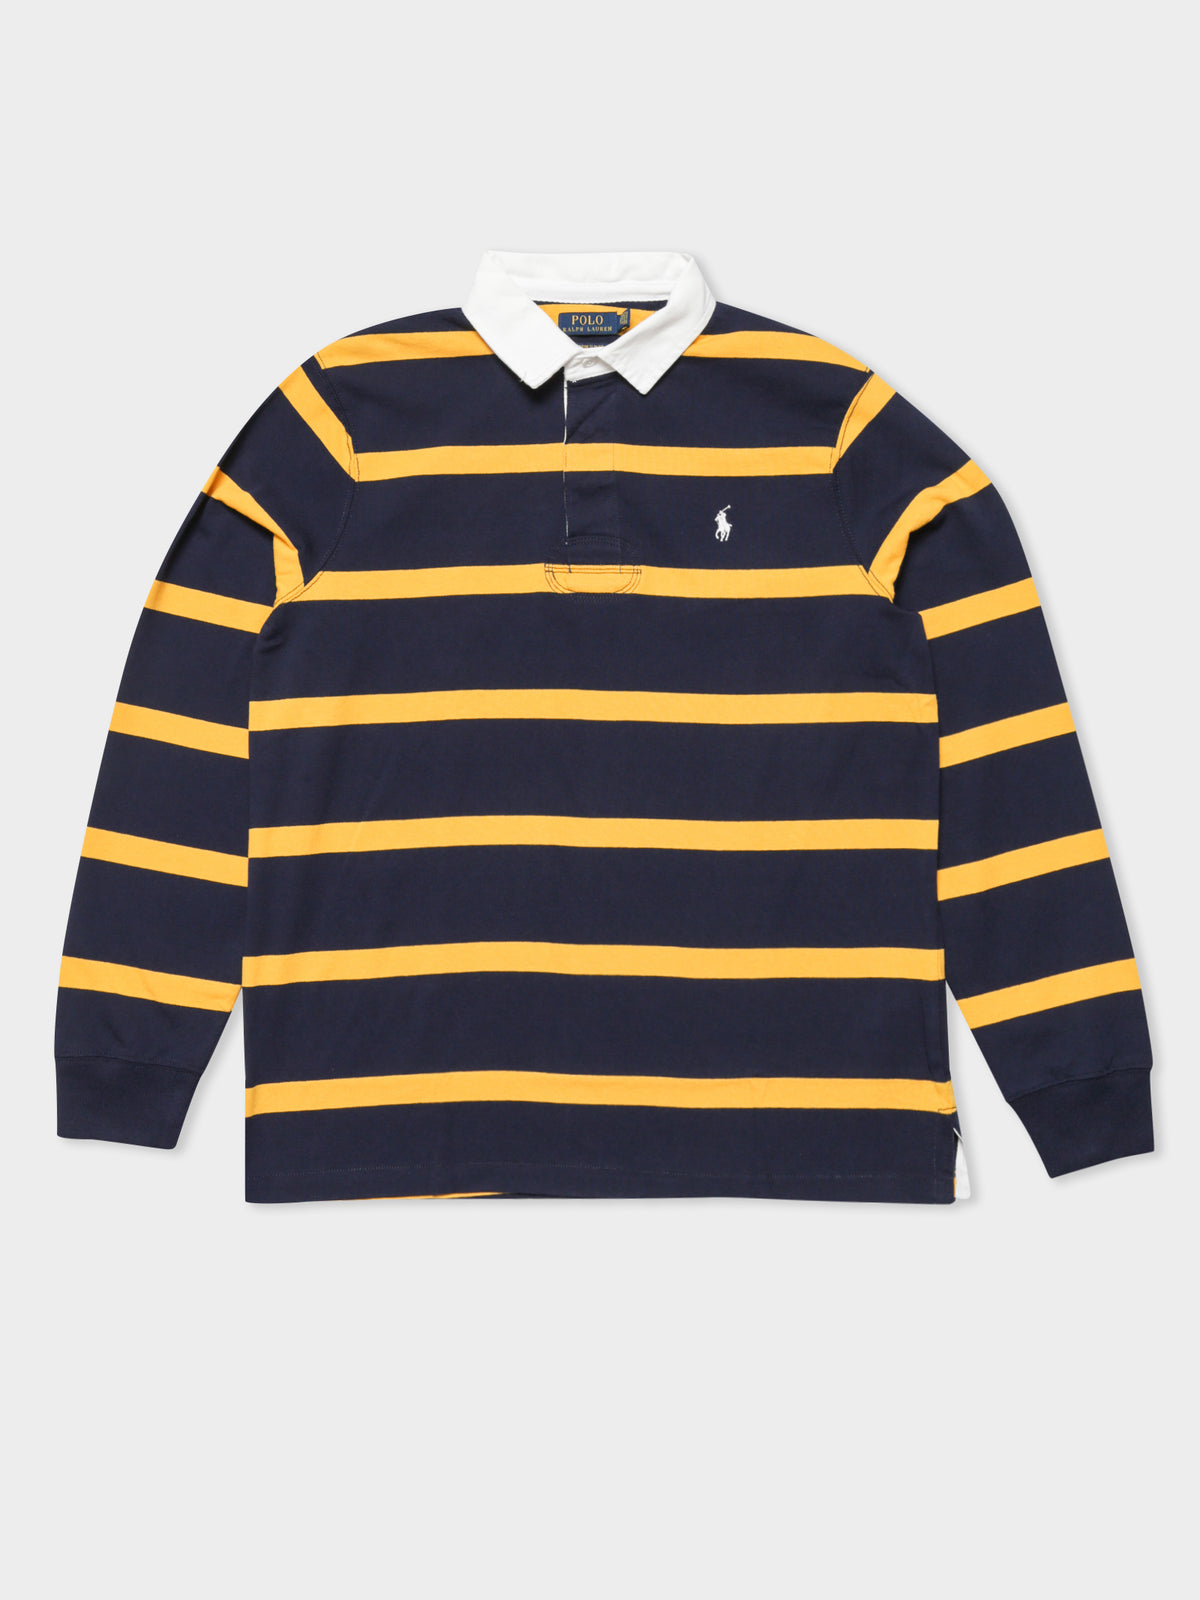 Narrow Stripe Rugby Shirt in Newport Navy &amp; Gold Bugle Stripe